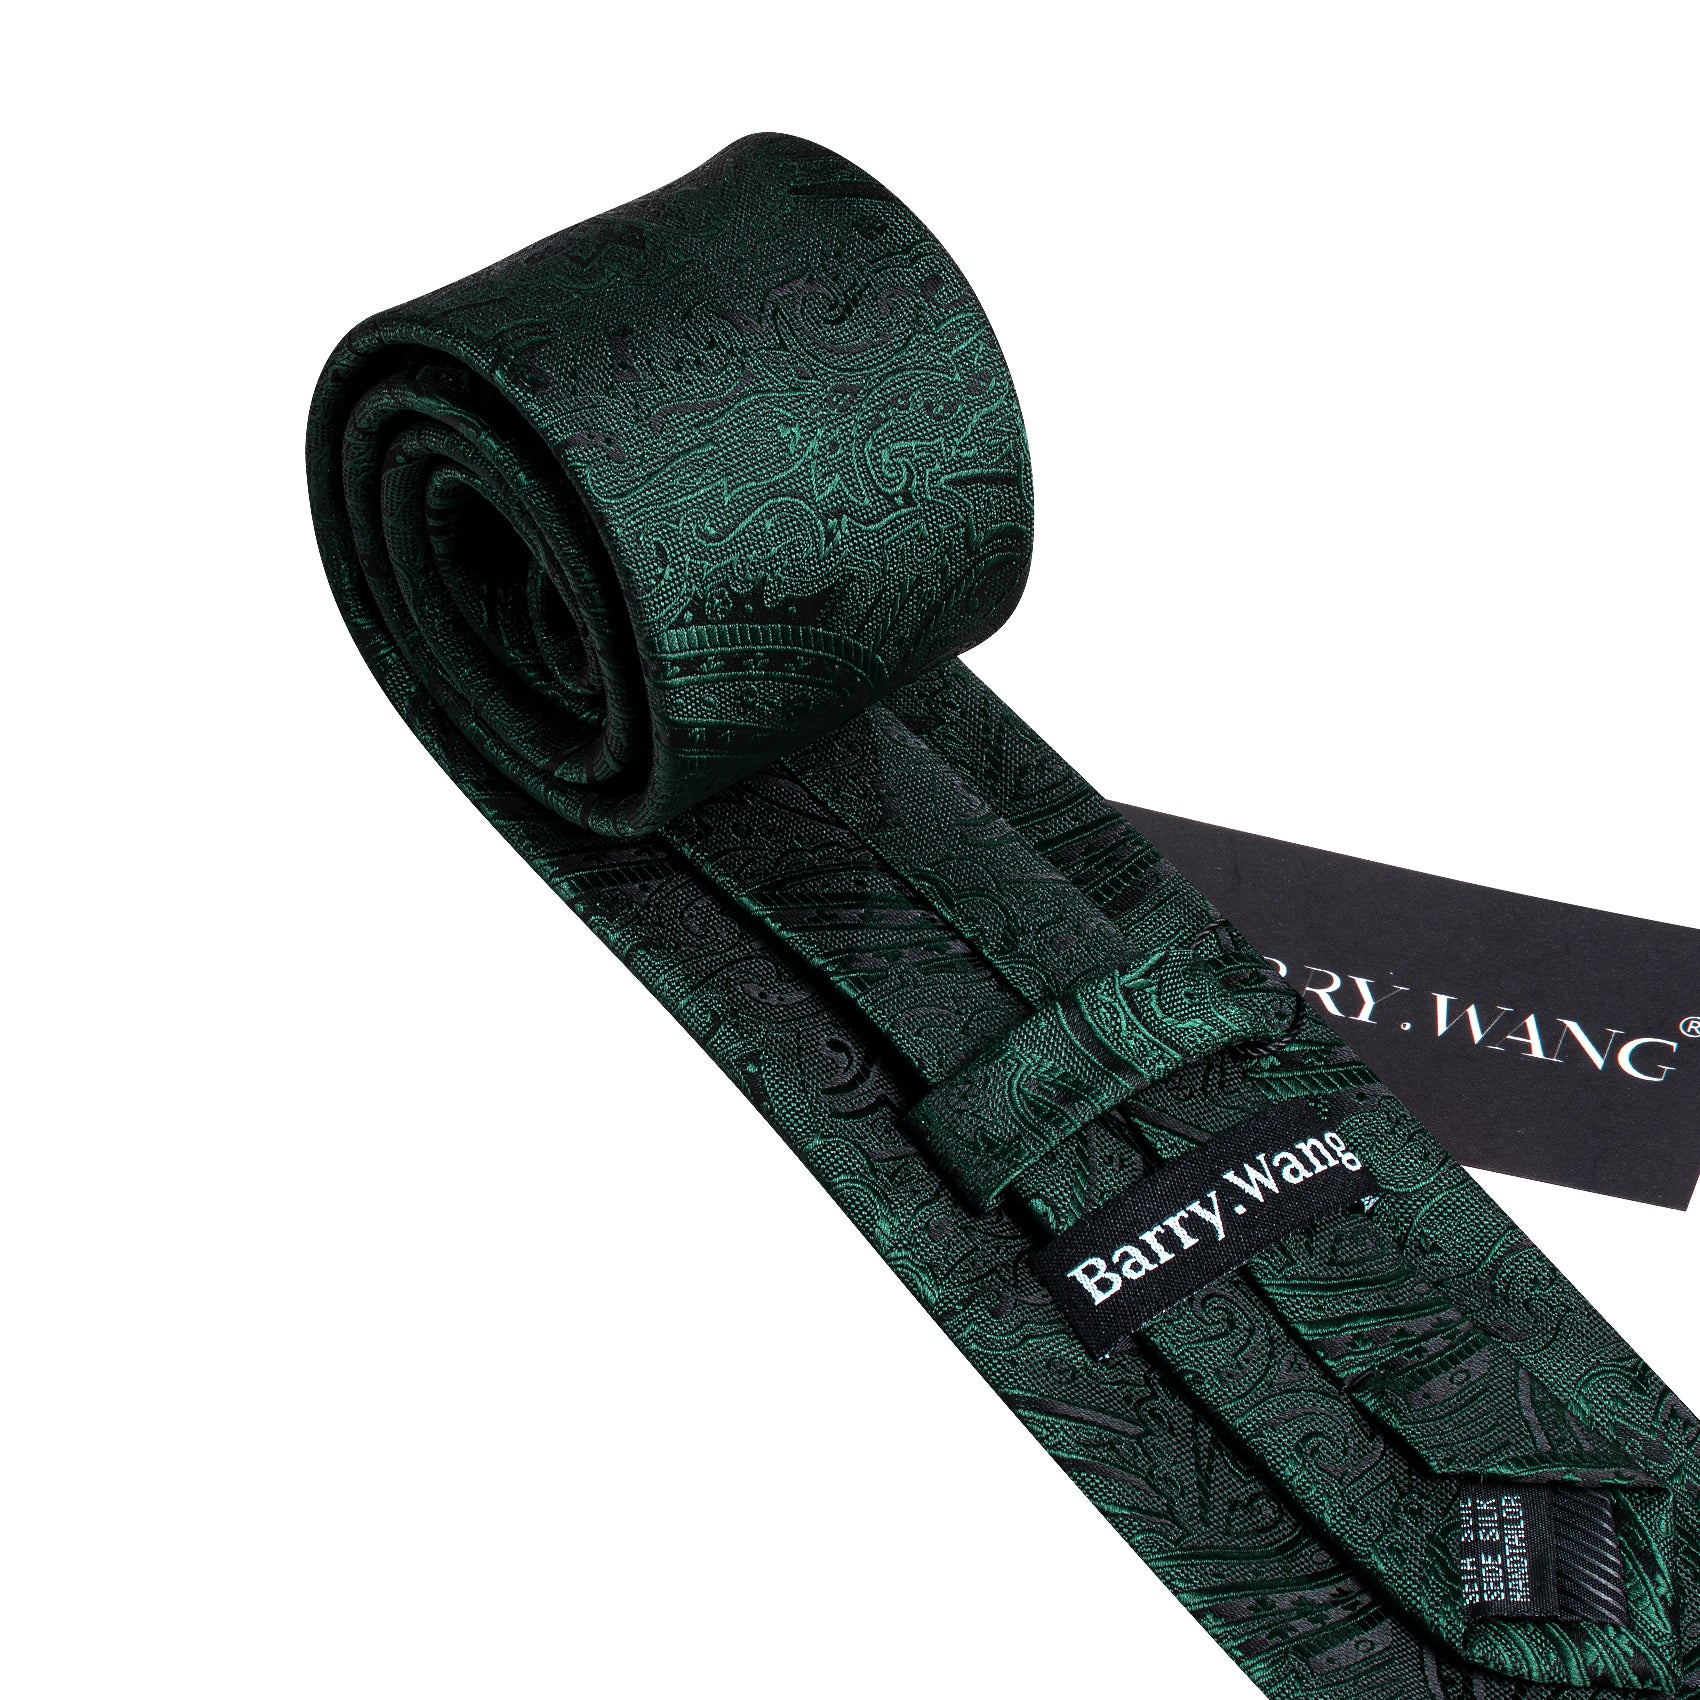 Barry Wang Green Tie Jacquard Paisley Silk Men's Tie Hanky Cufflinks Set